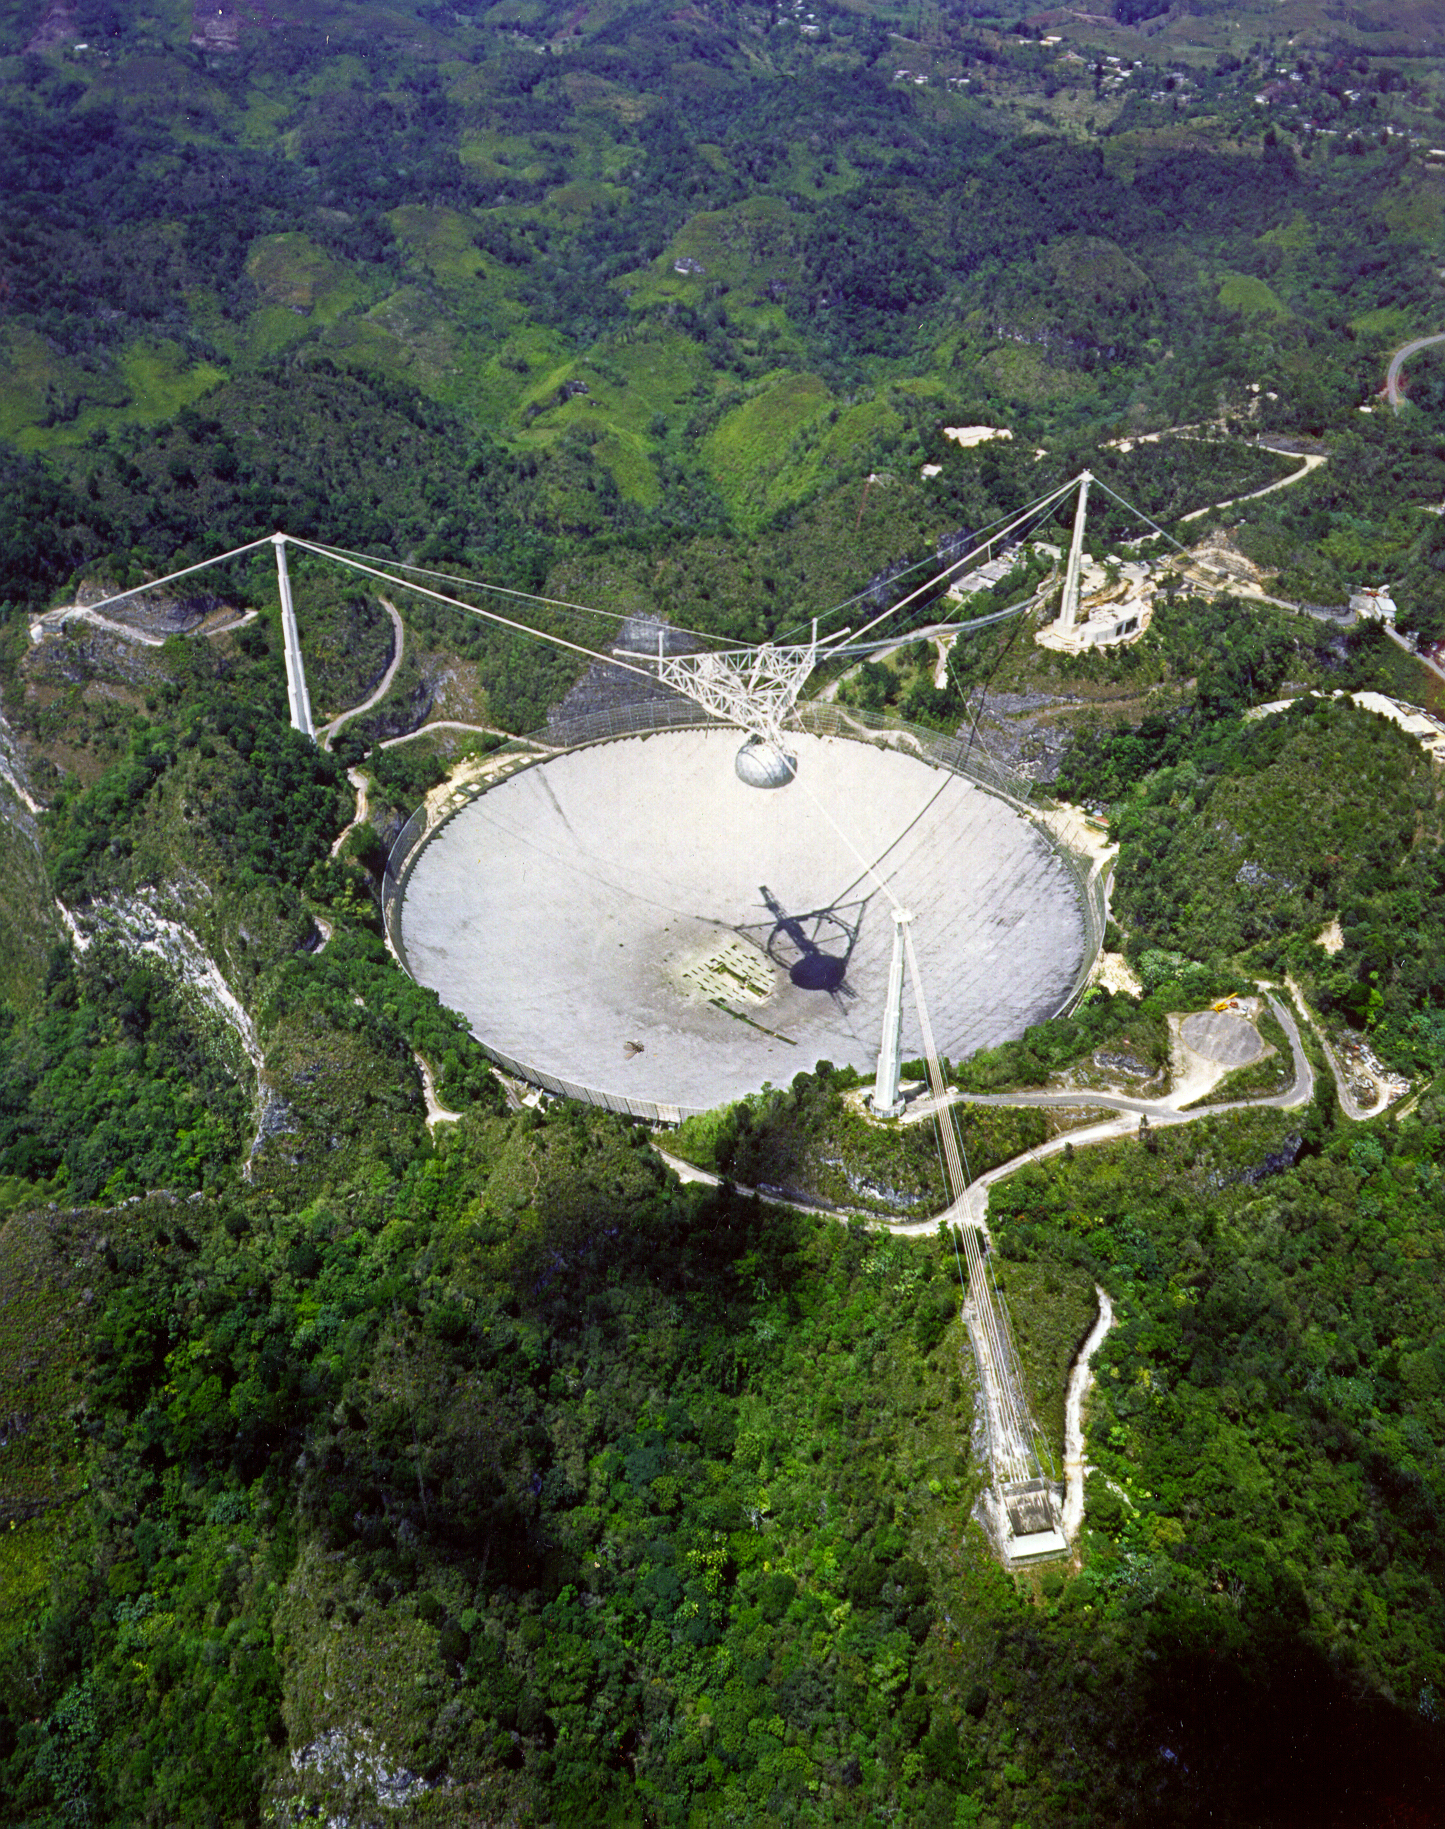 The planetary radar facility at the Arecibo Observatory in Puerto Rico